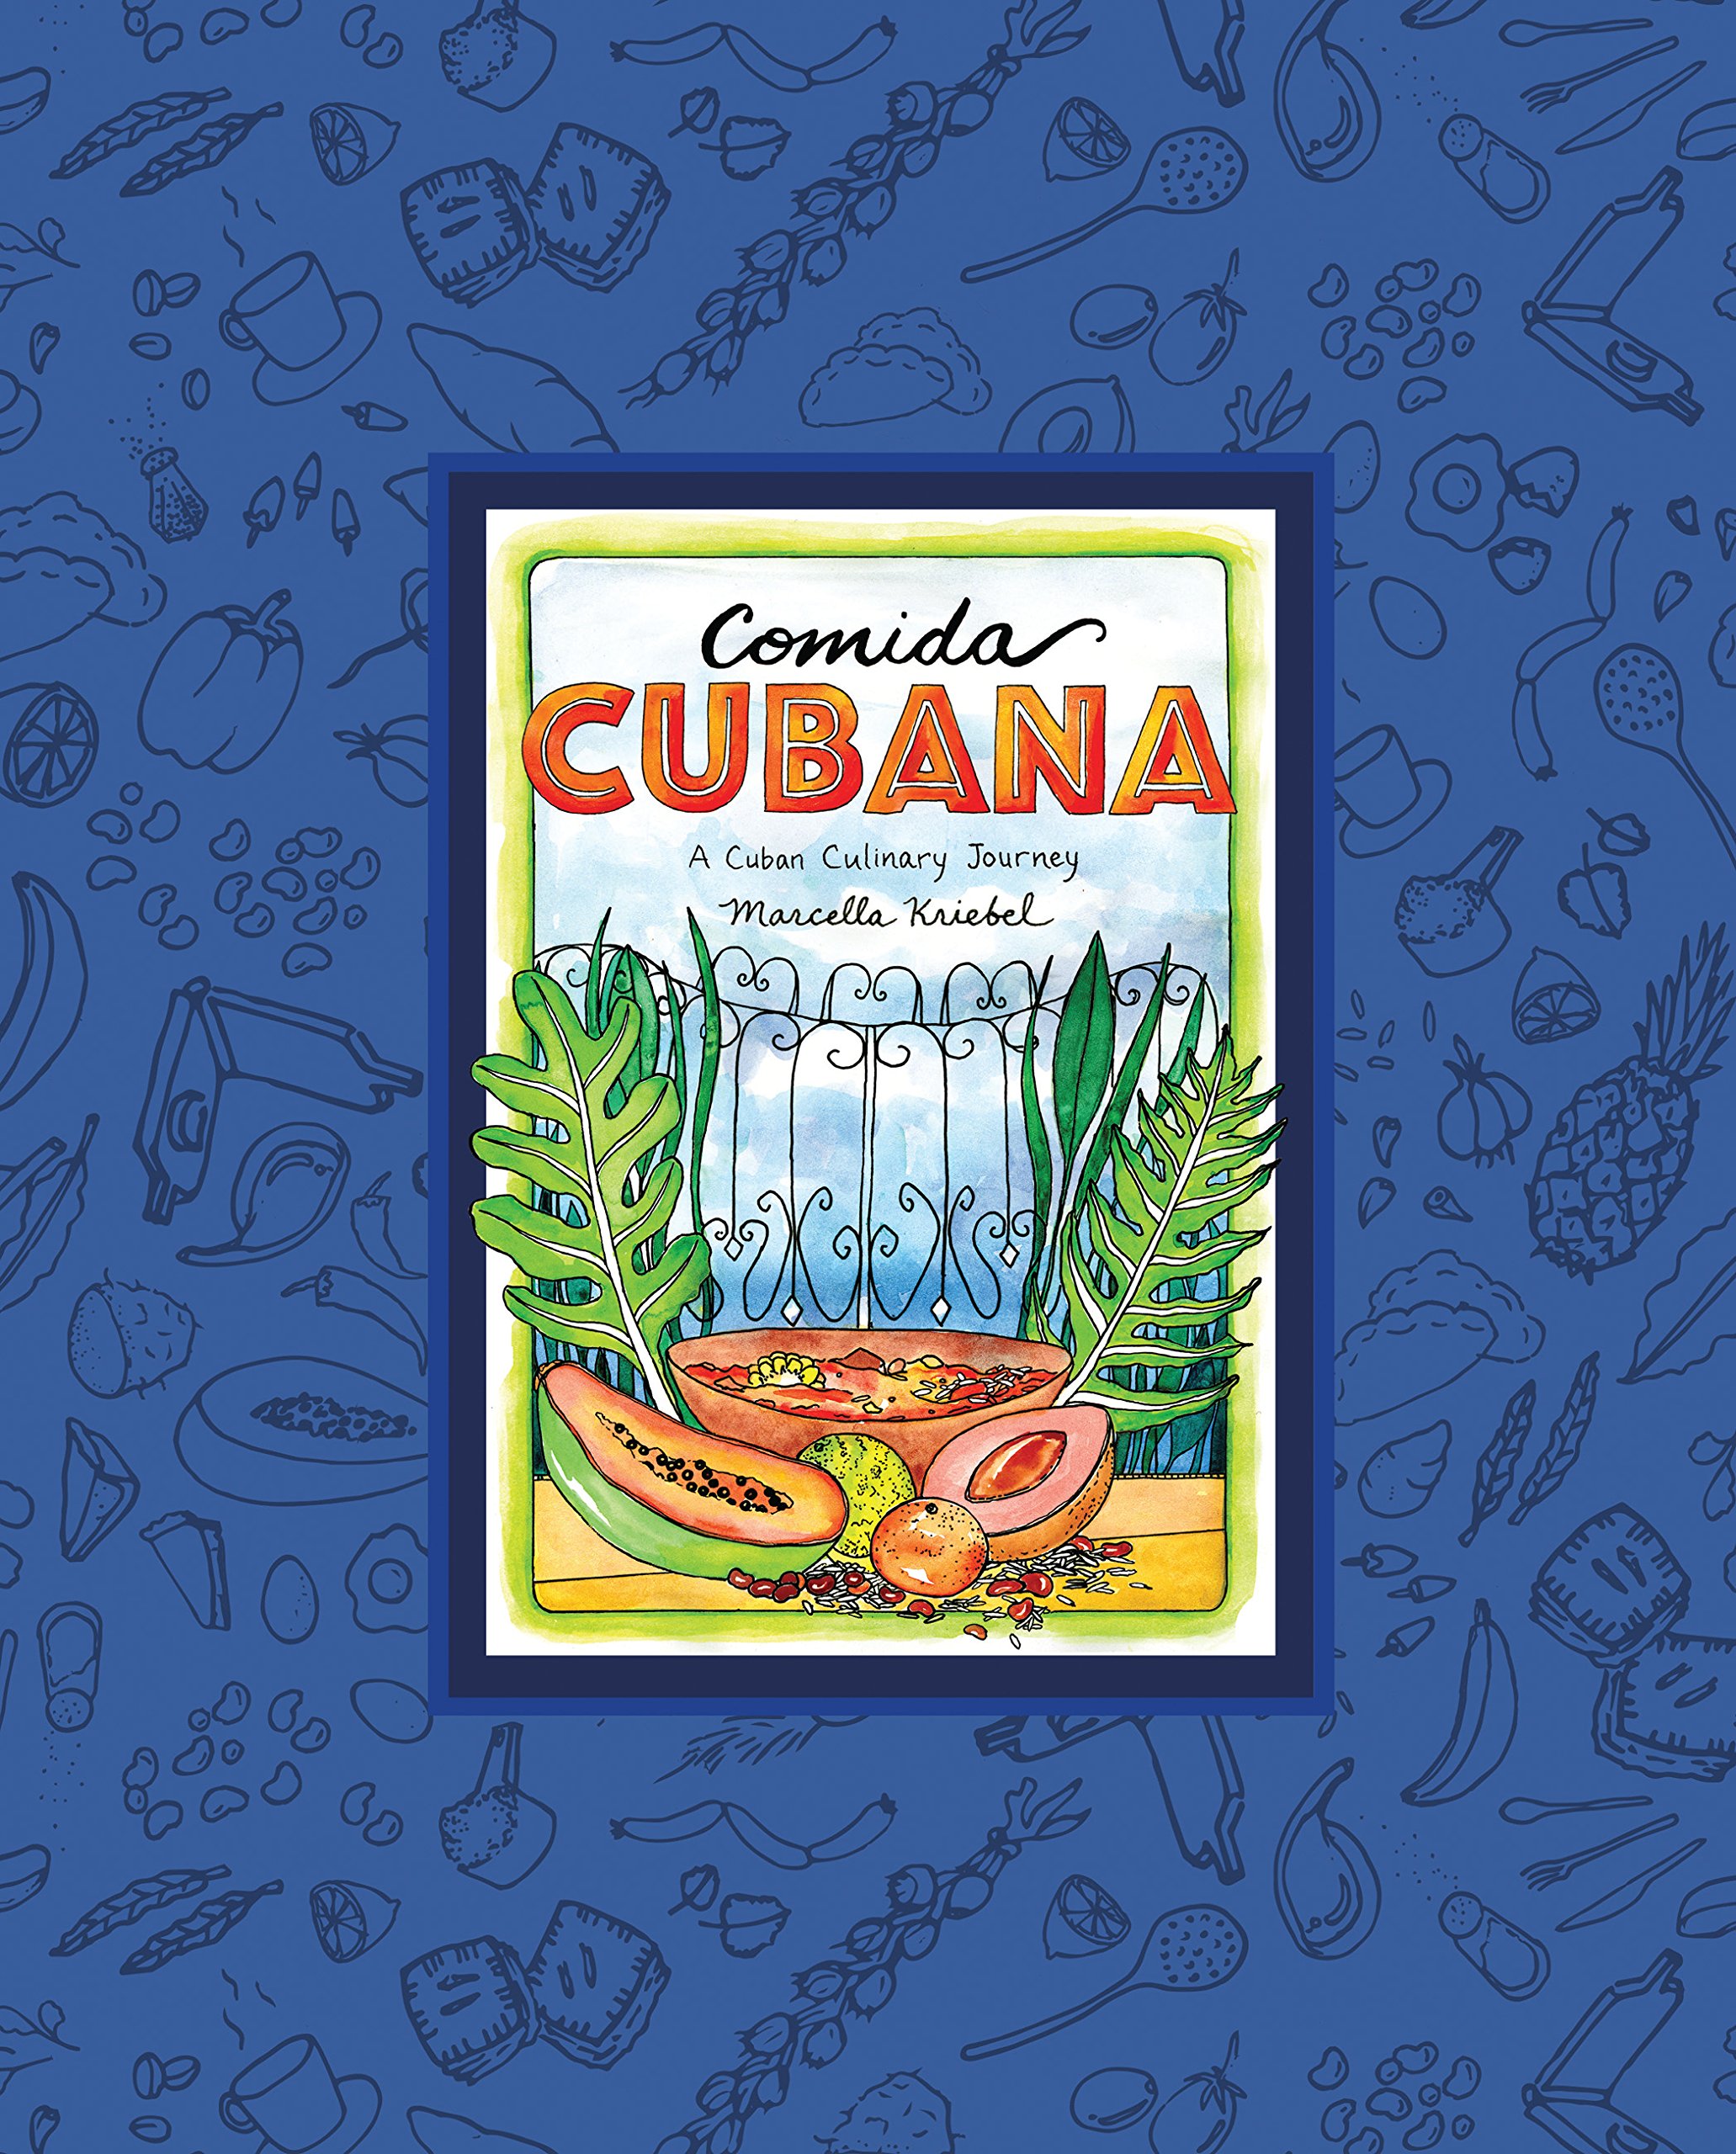 Comida Cubana - A Cuban Culinary Journey